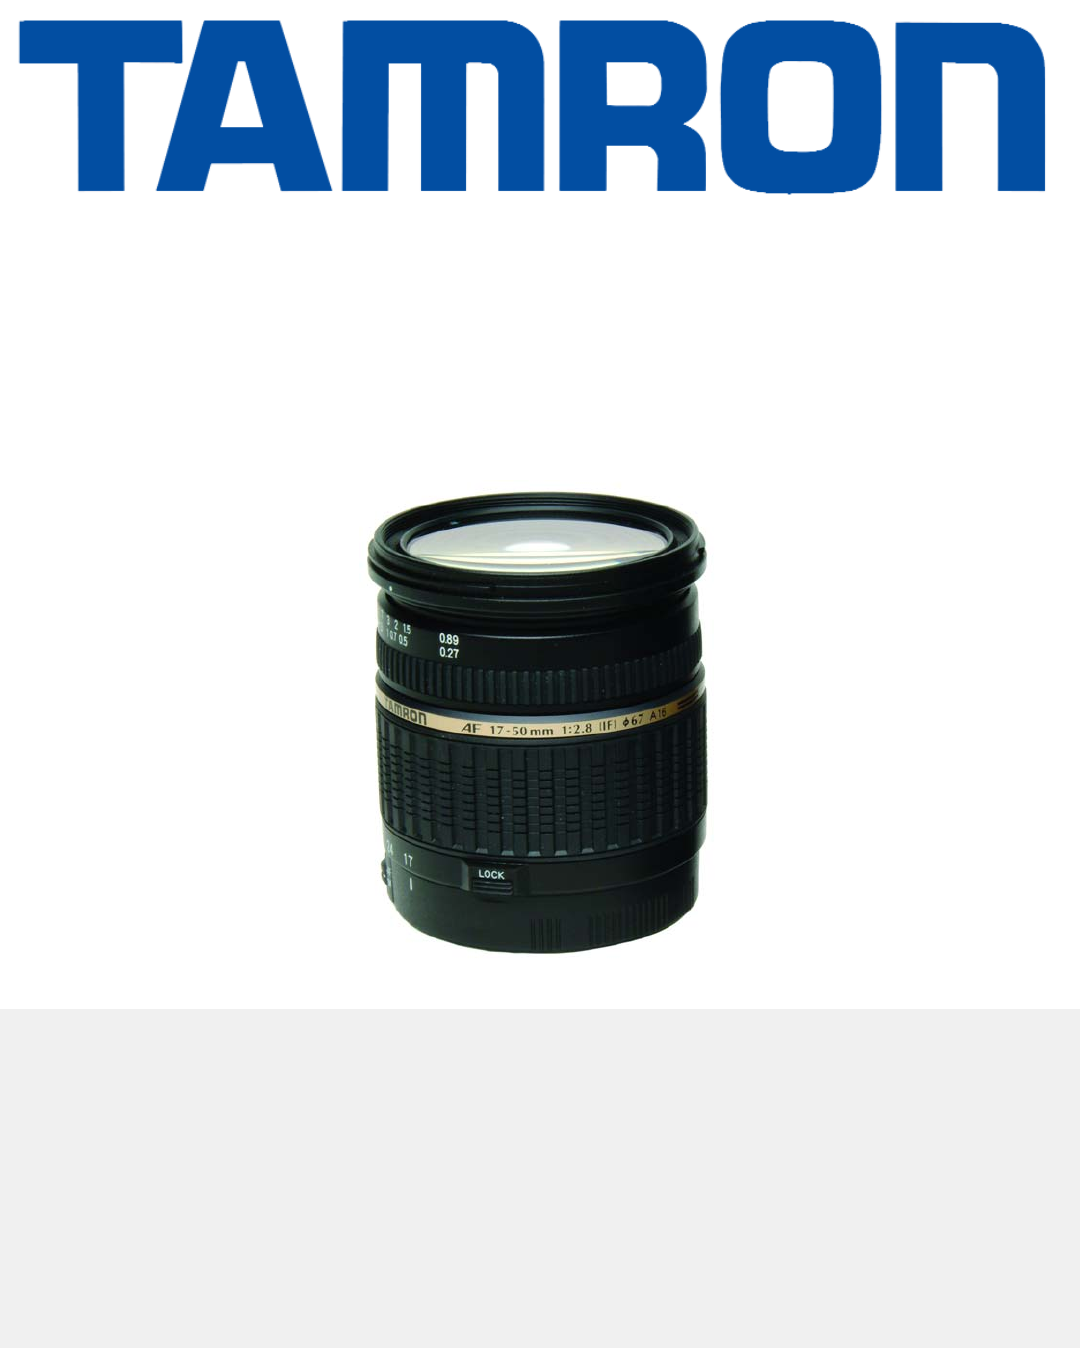 Tamron fotovix manual